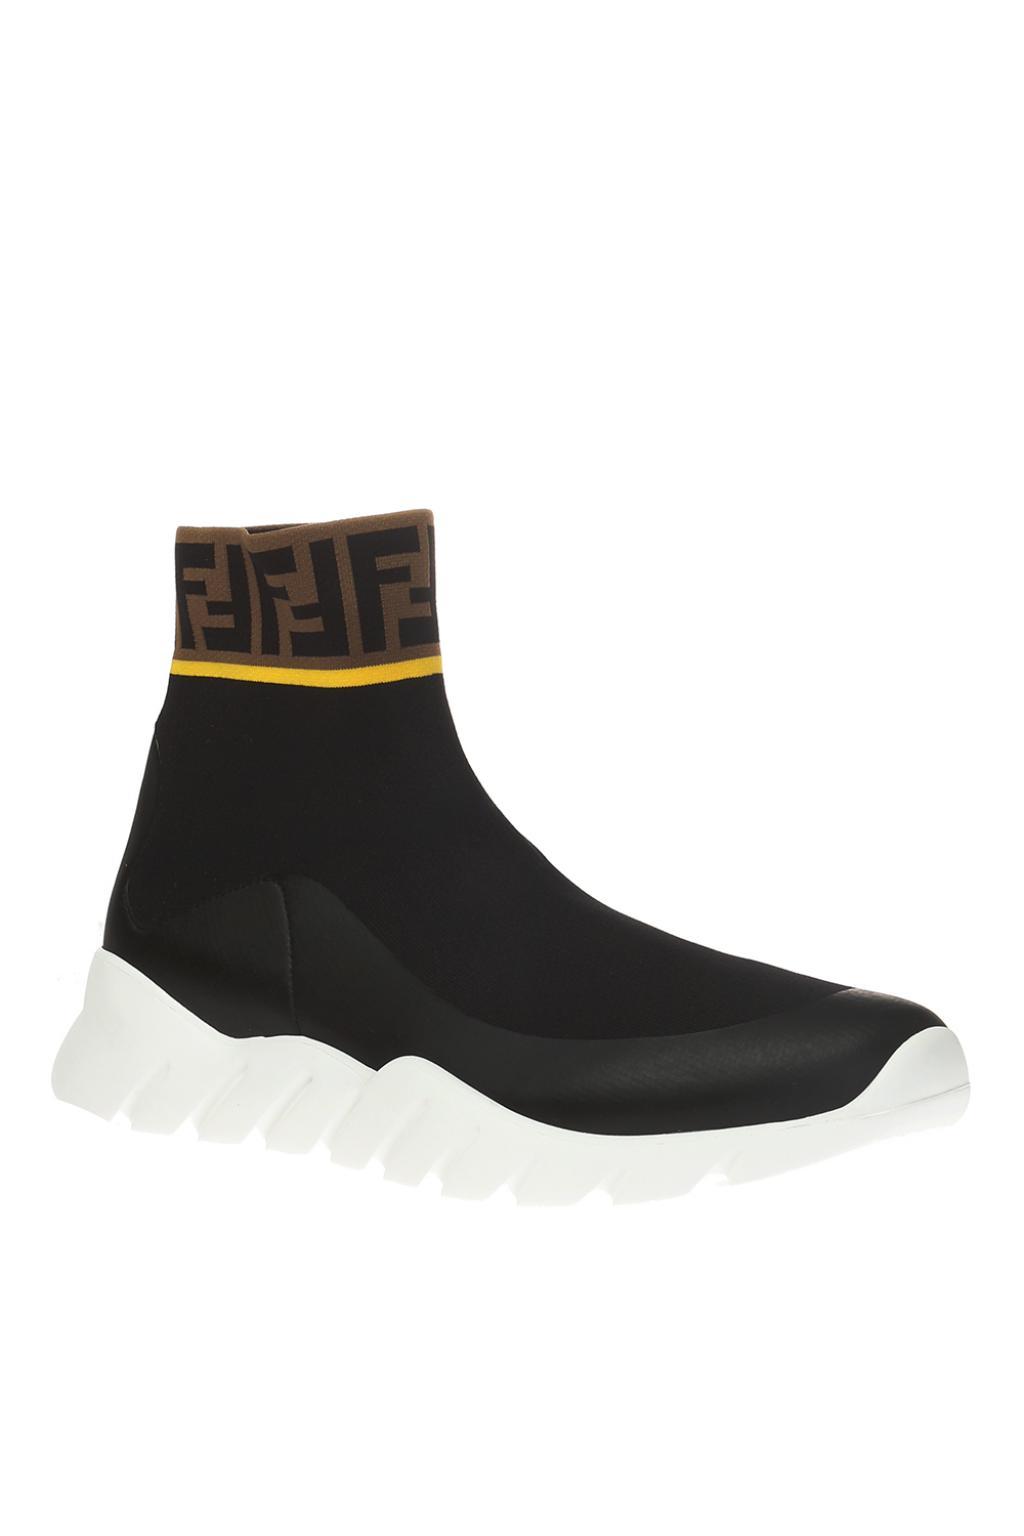 Fendi Synthetic Logo Hi-top Stretch Sock Sneakers in Black for Men ...